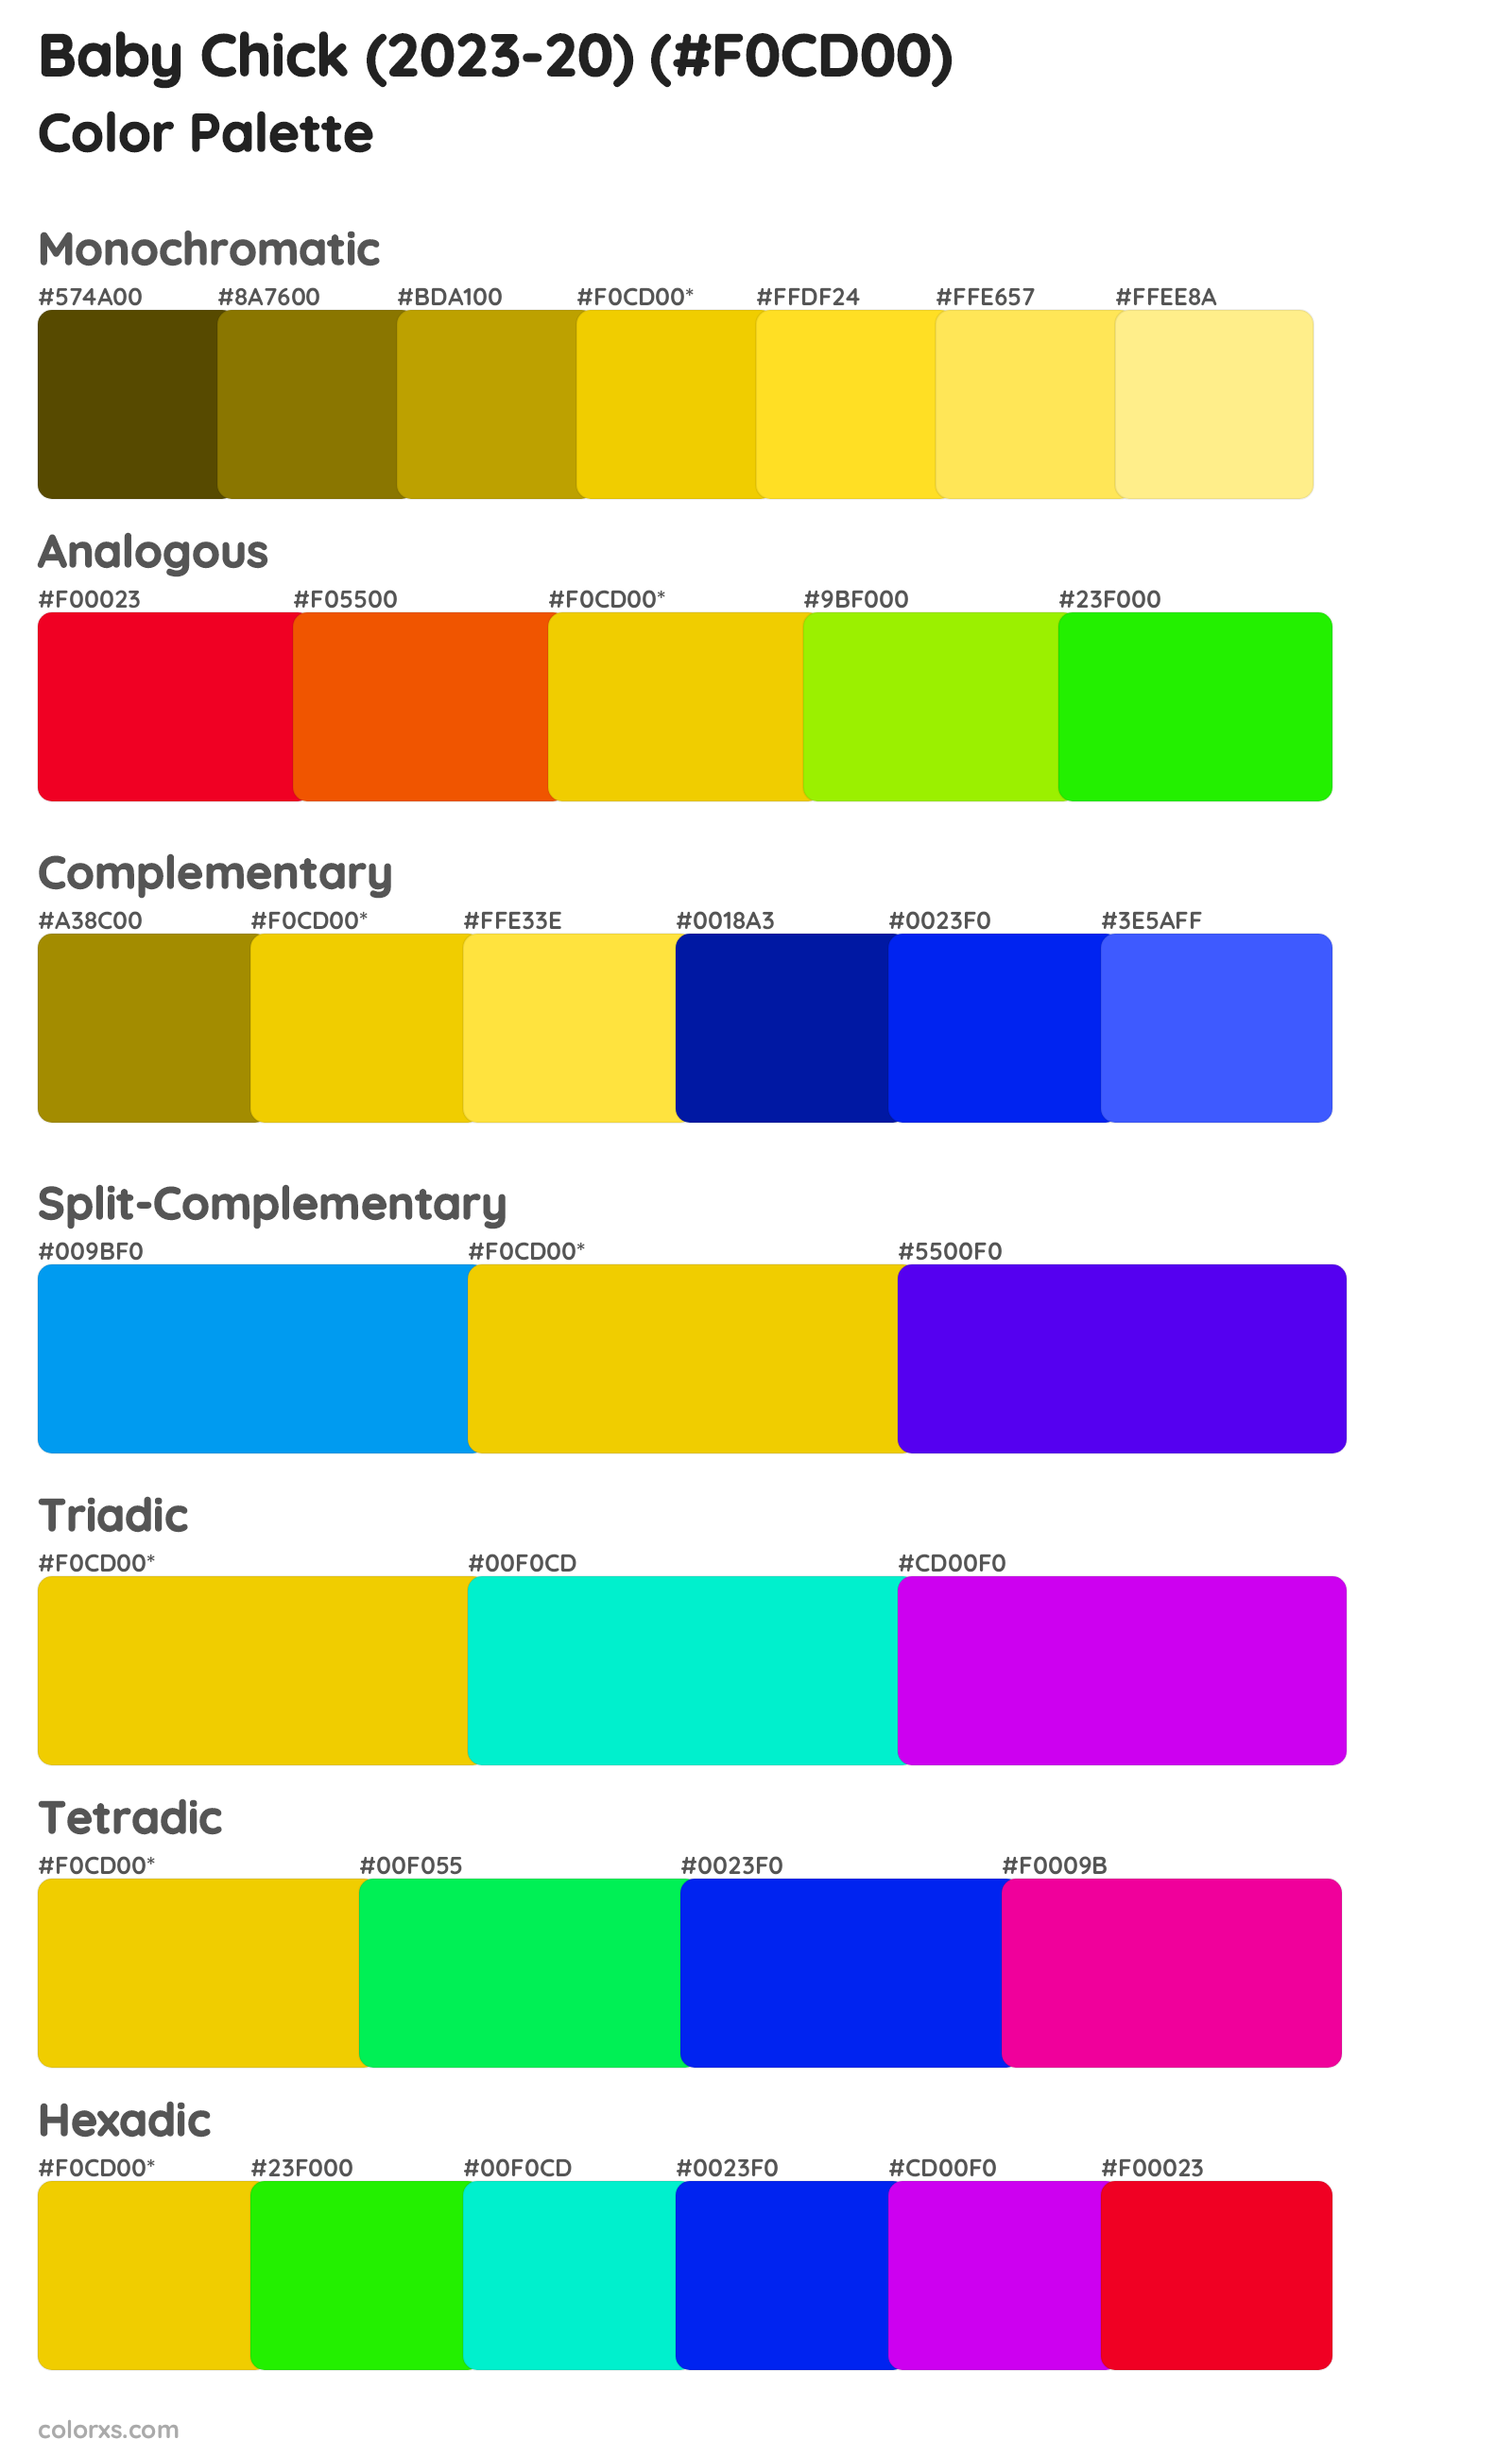 Baby Chick (2023-20) Color Scheme Palettes